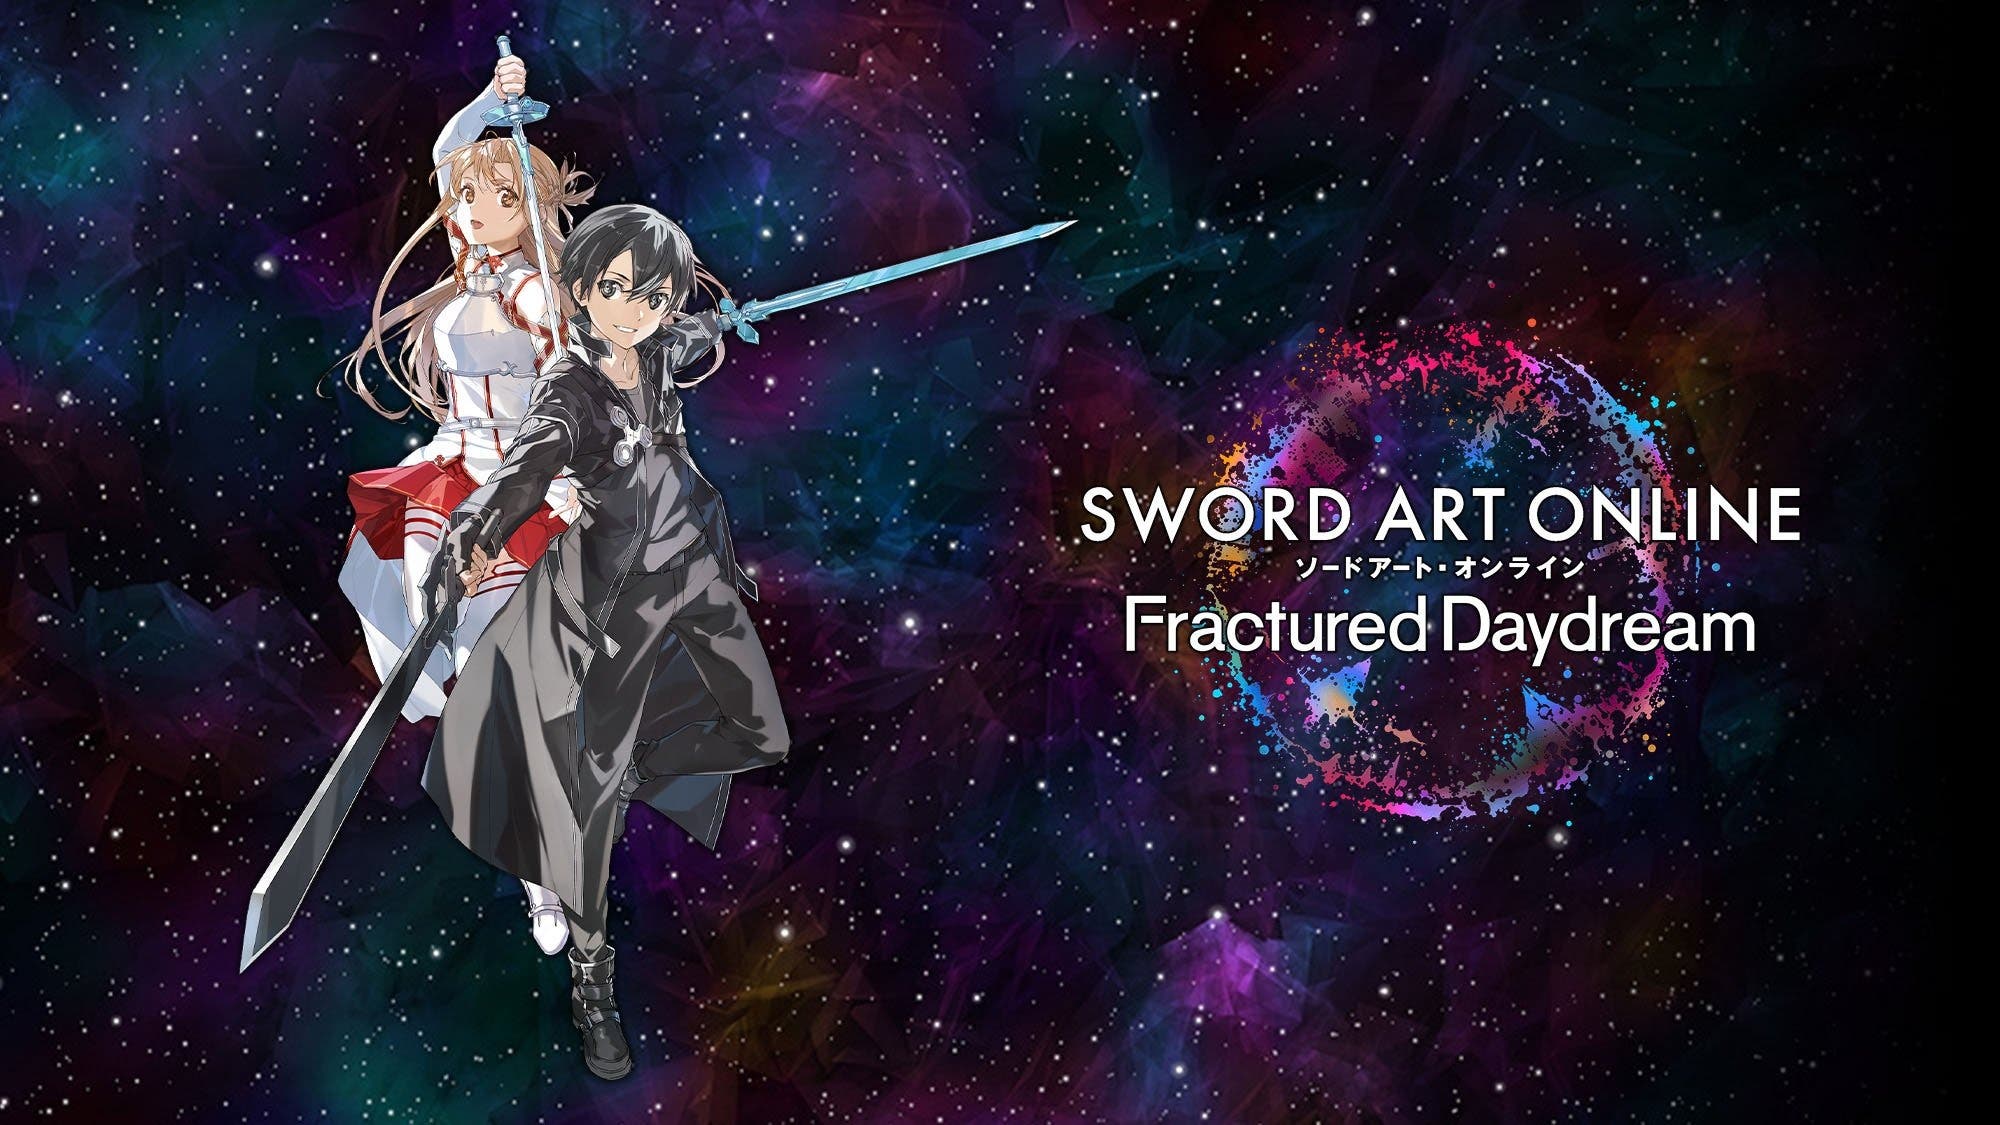 Sword Art Online: Fractured Daydream confirma fecha occidental